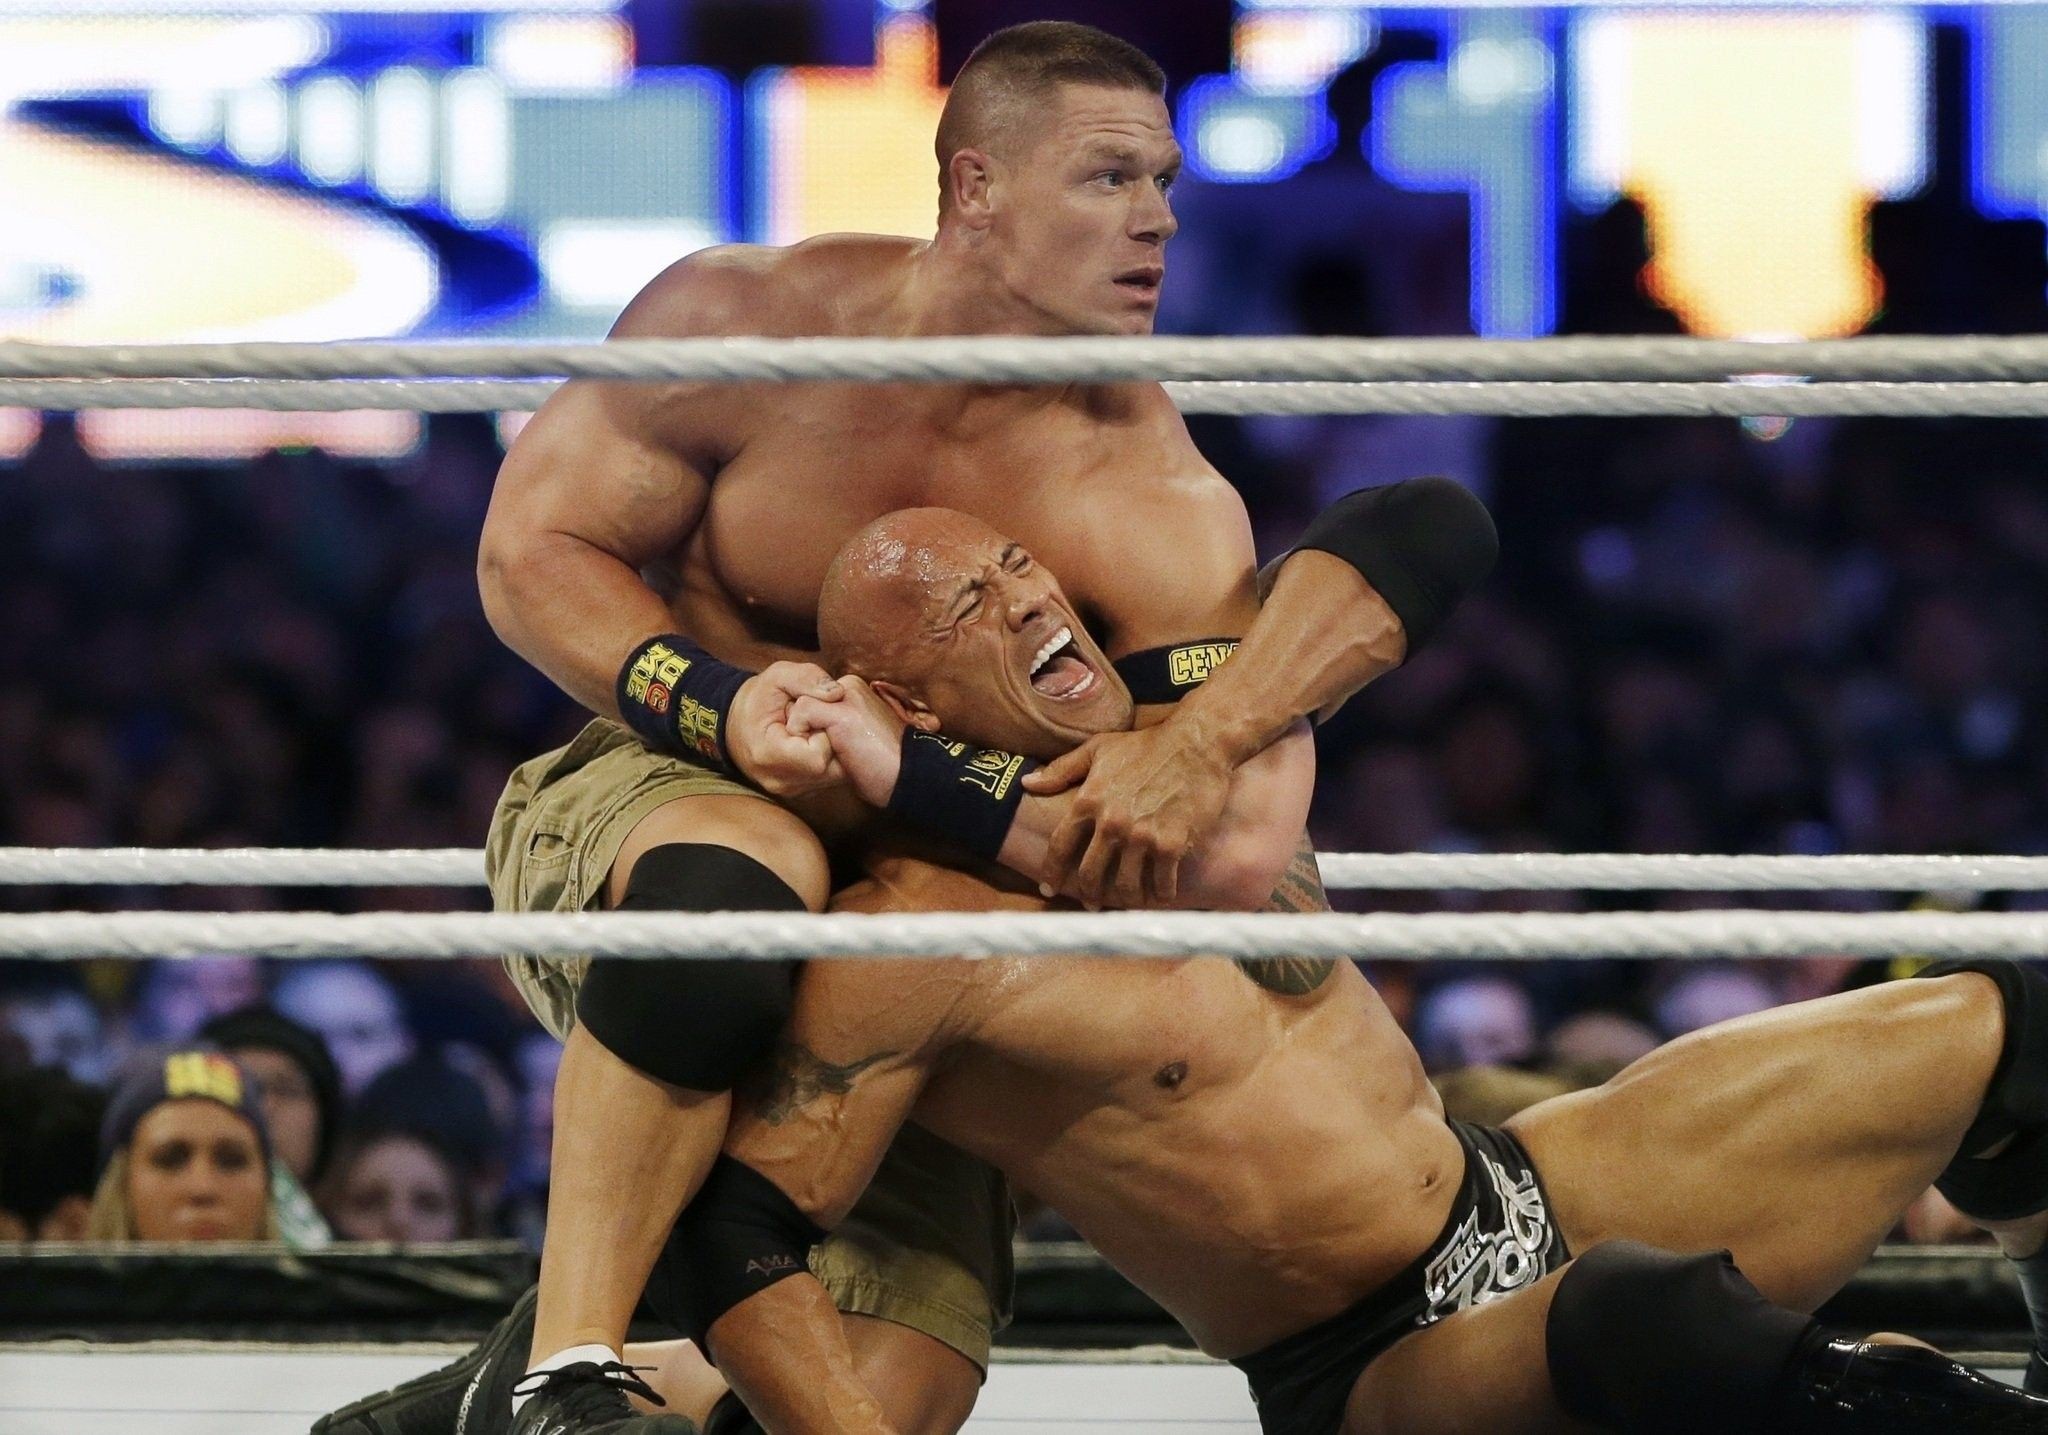 2048x1435 John Cena Fight With Rock in Wrestlemania 29